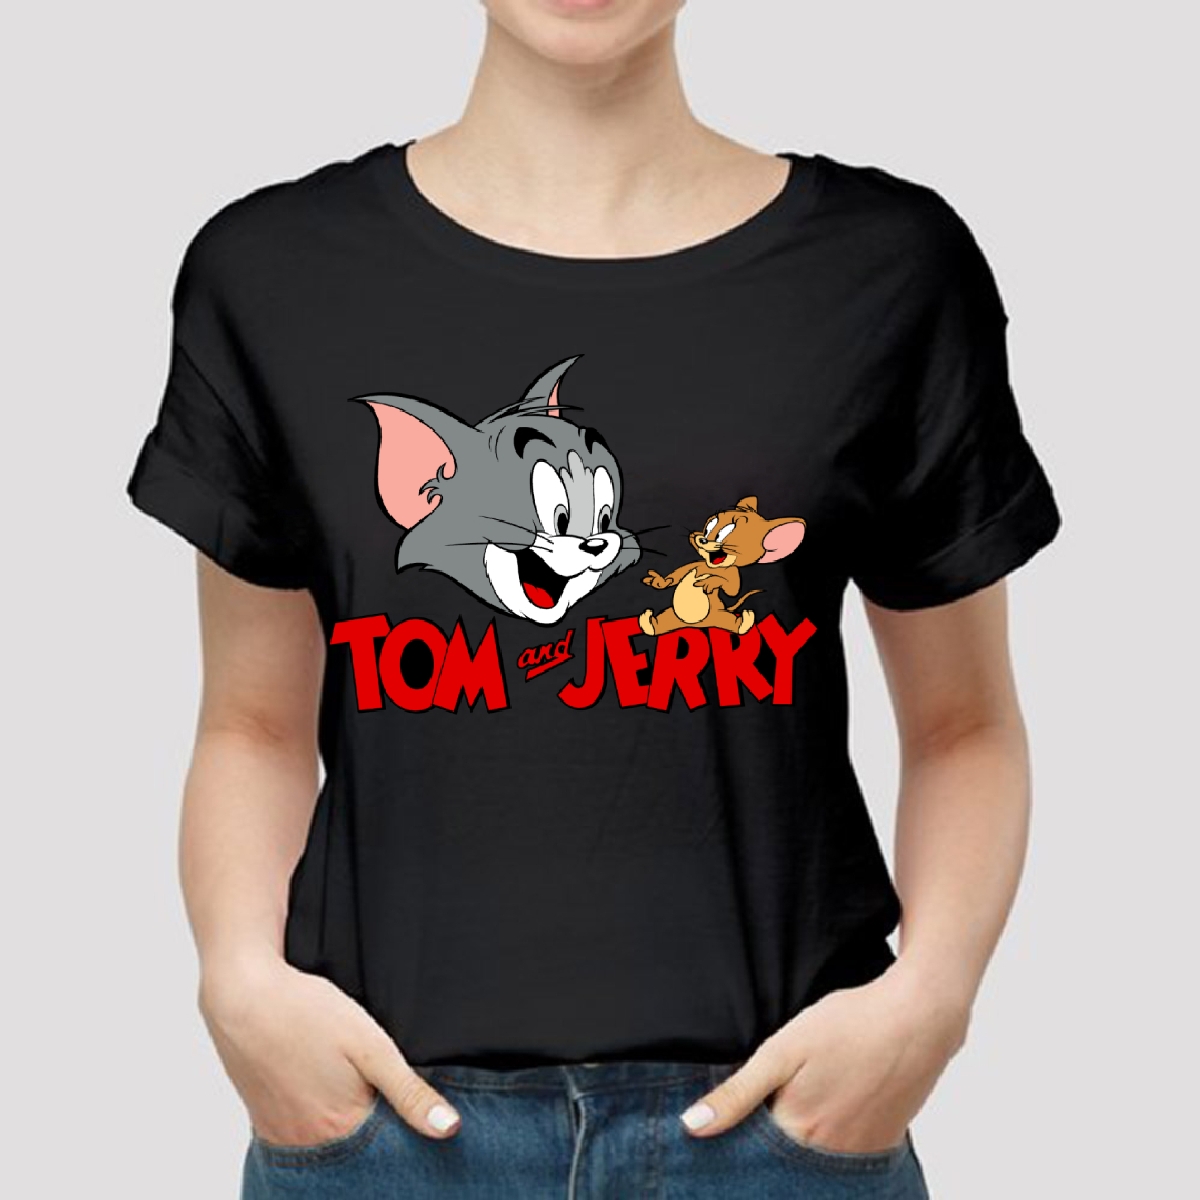 Black Tom & Jerry Printed T Shirt